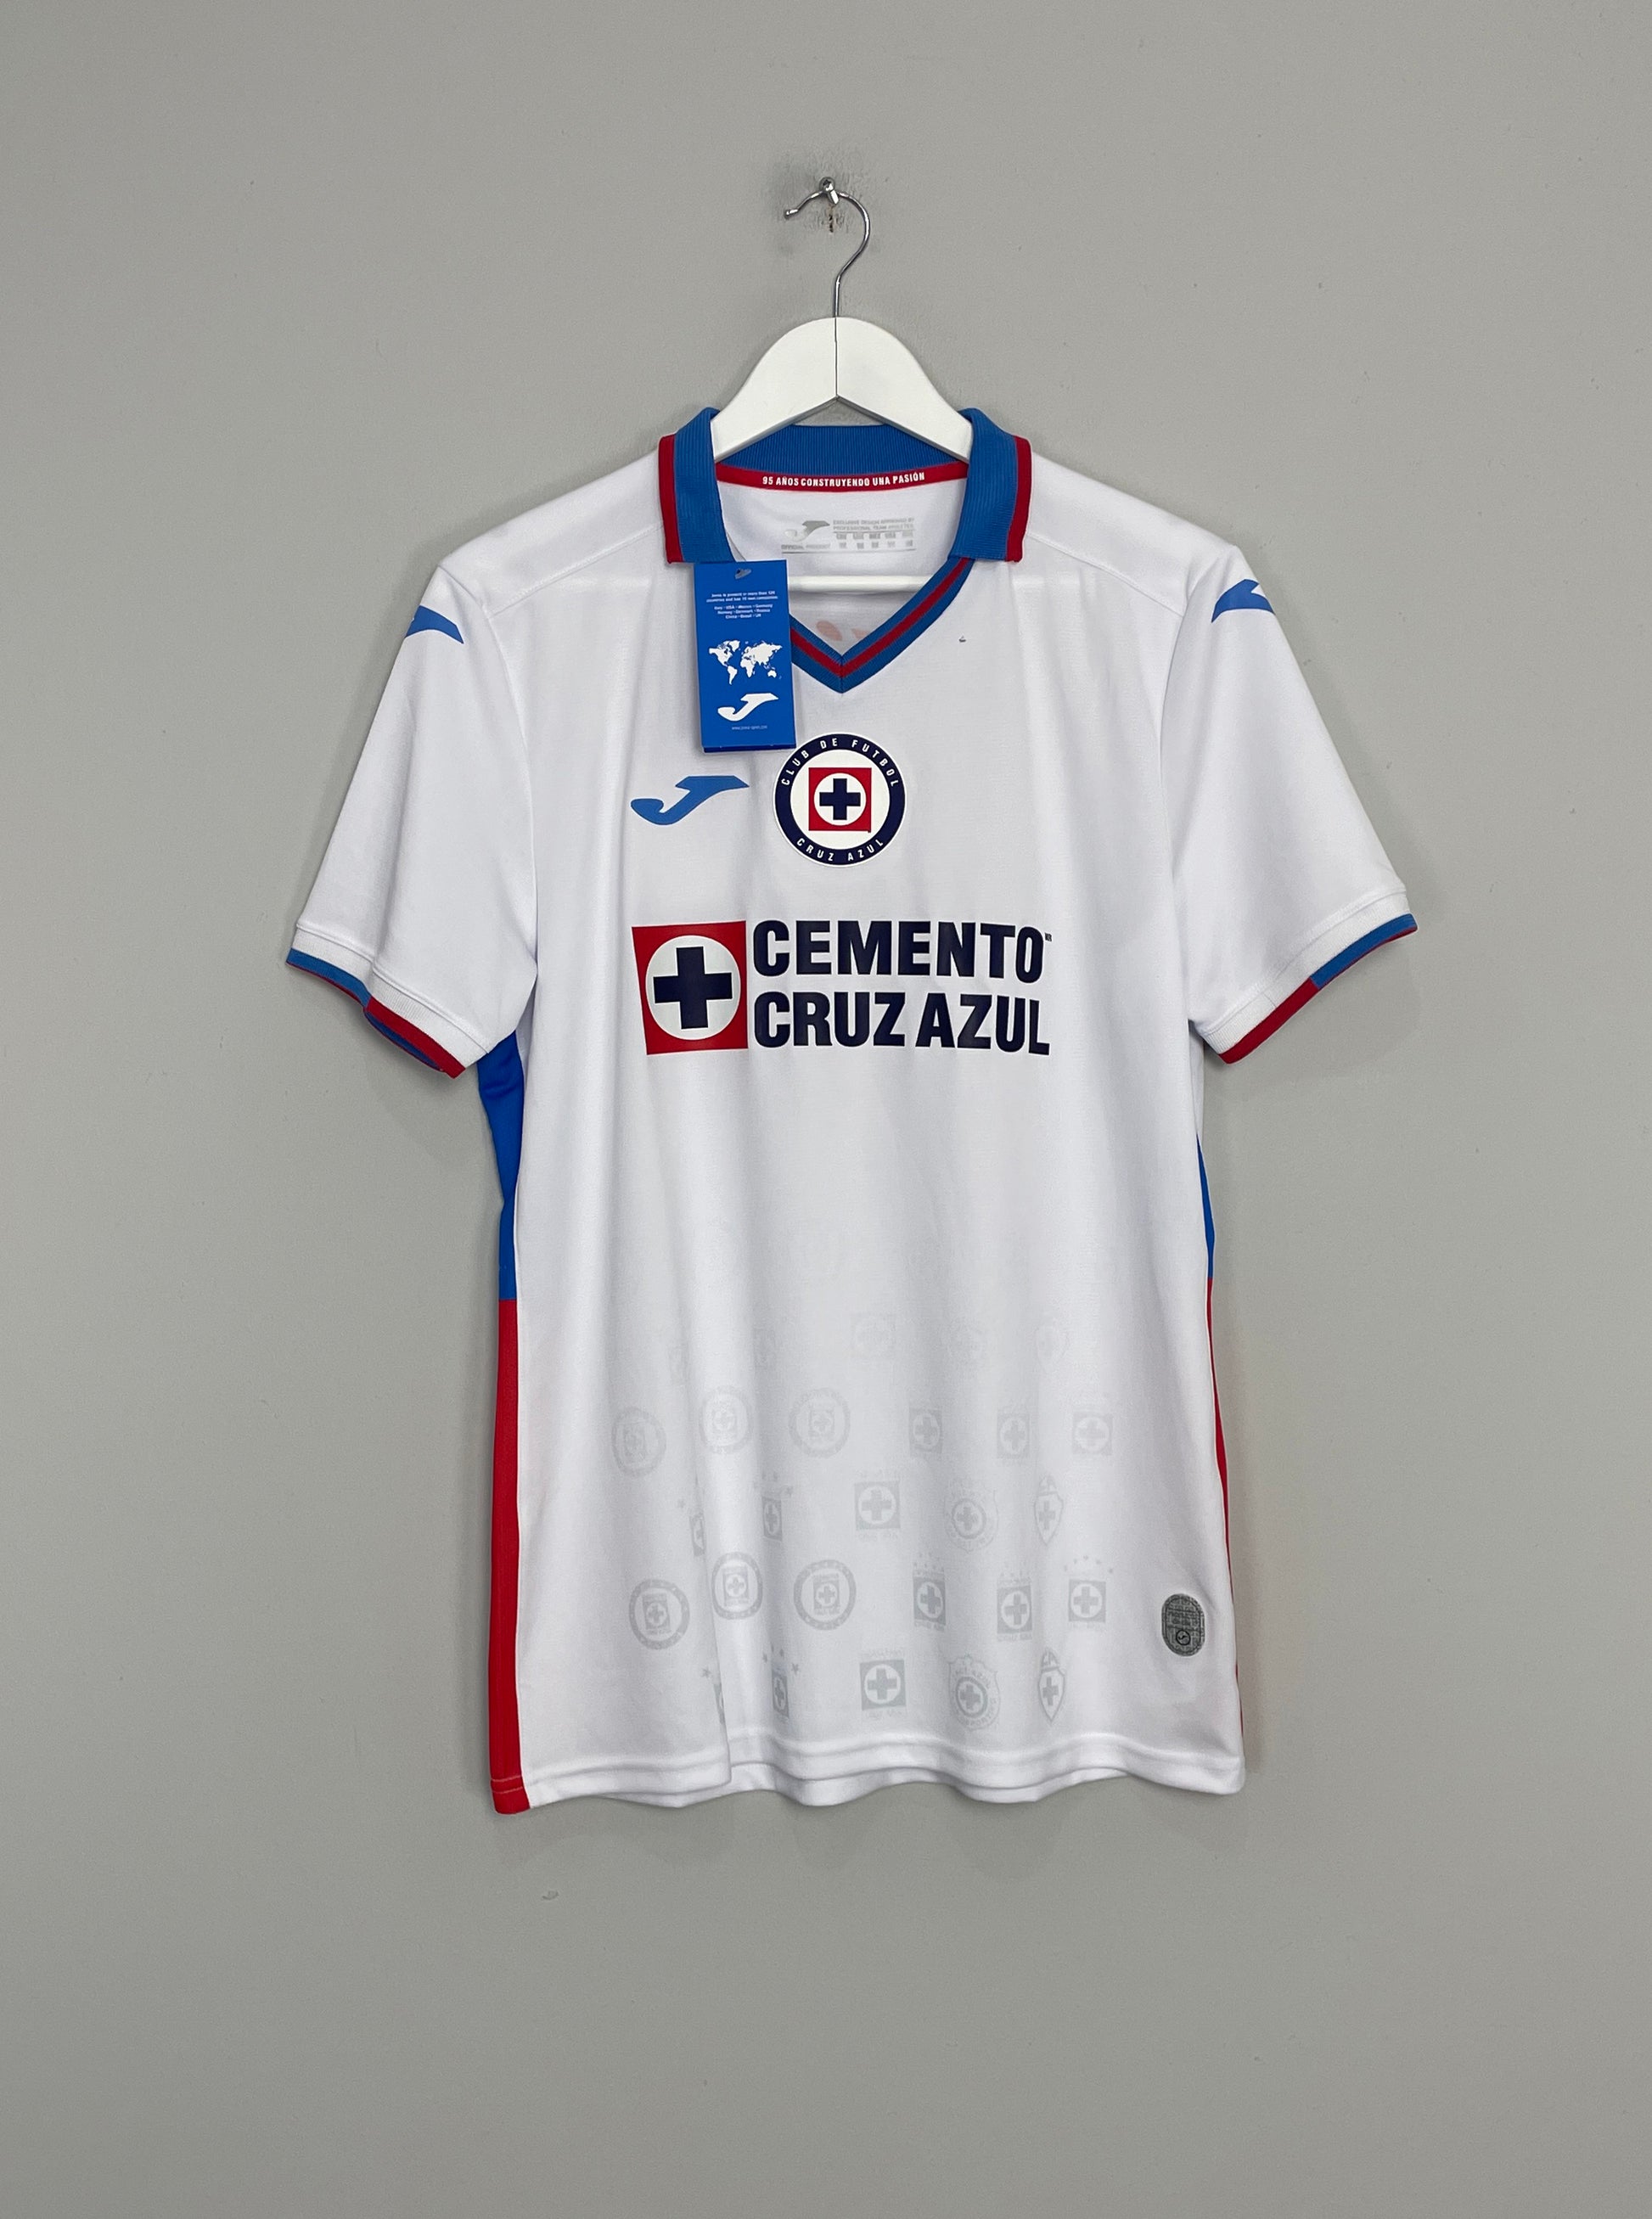 Image of the Cruz Azul shirt from the 2022/23 season